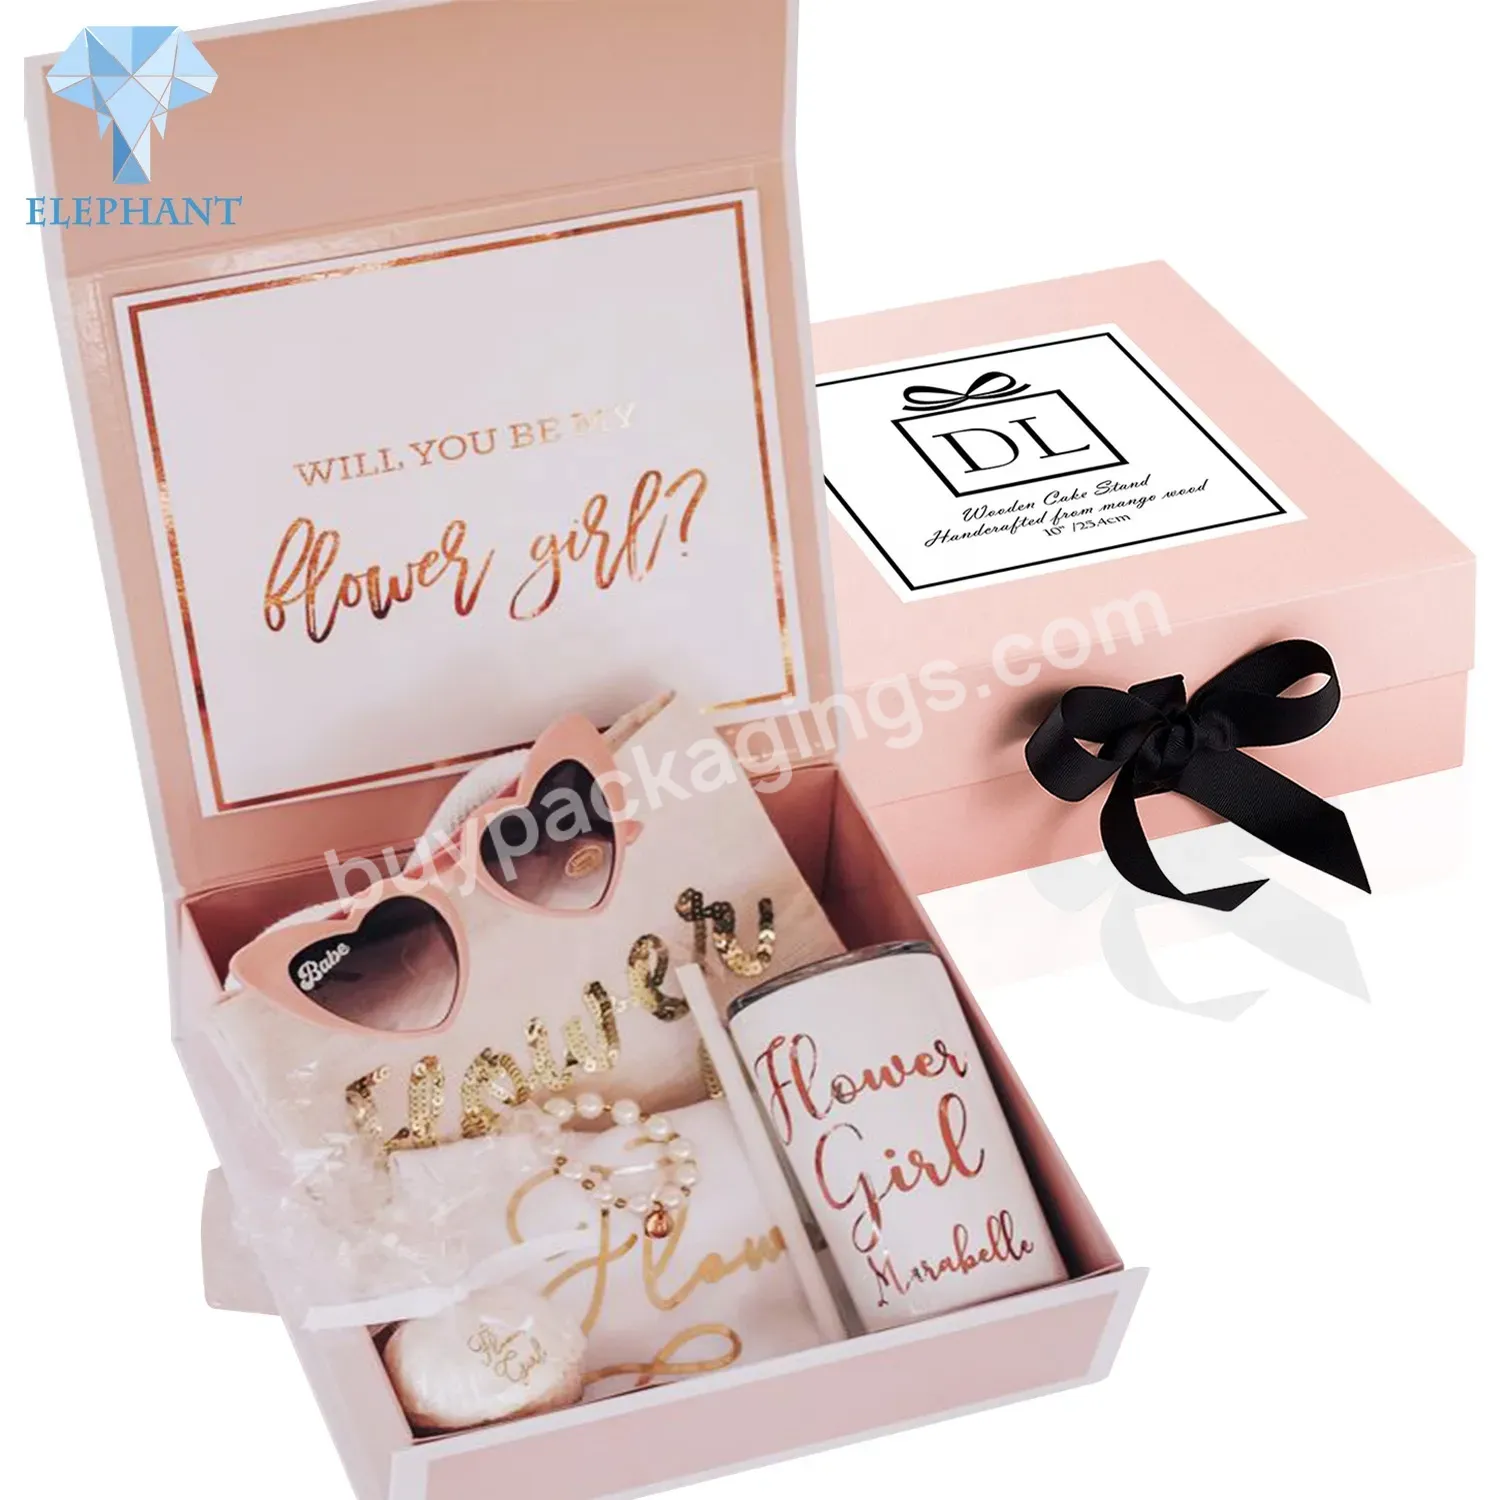 Custom Printed Cosmetic Cardboard Paper Wedding Big Luxury Gift Box Packaging With Ribbon